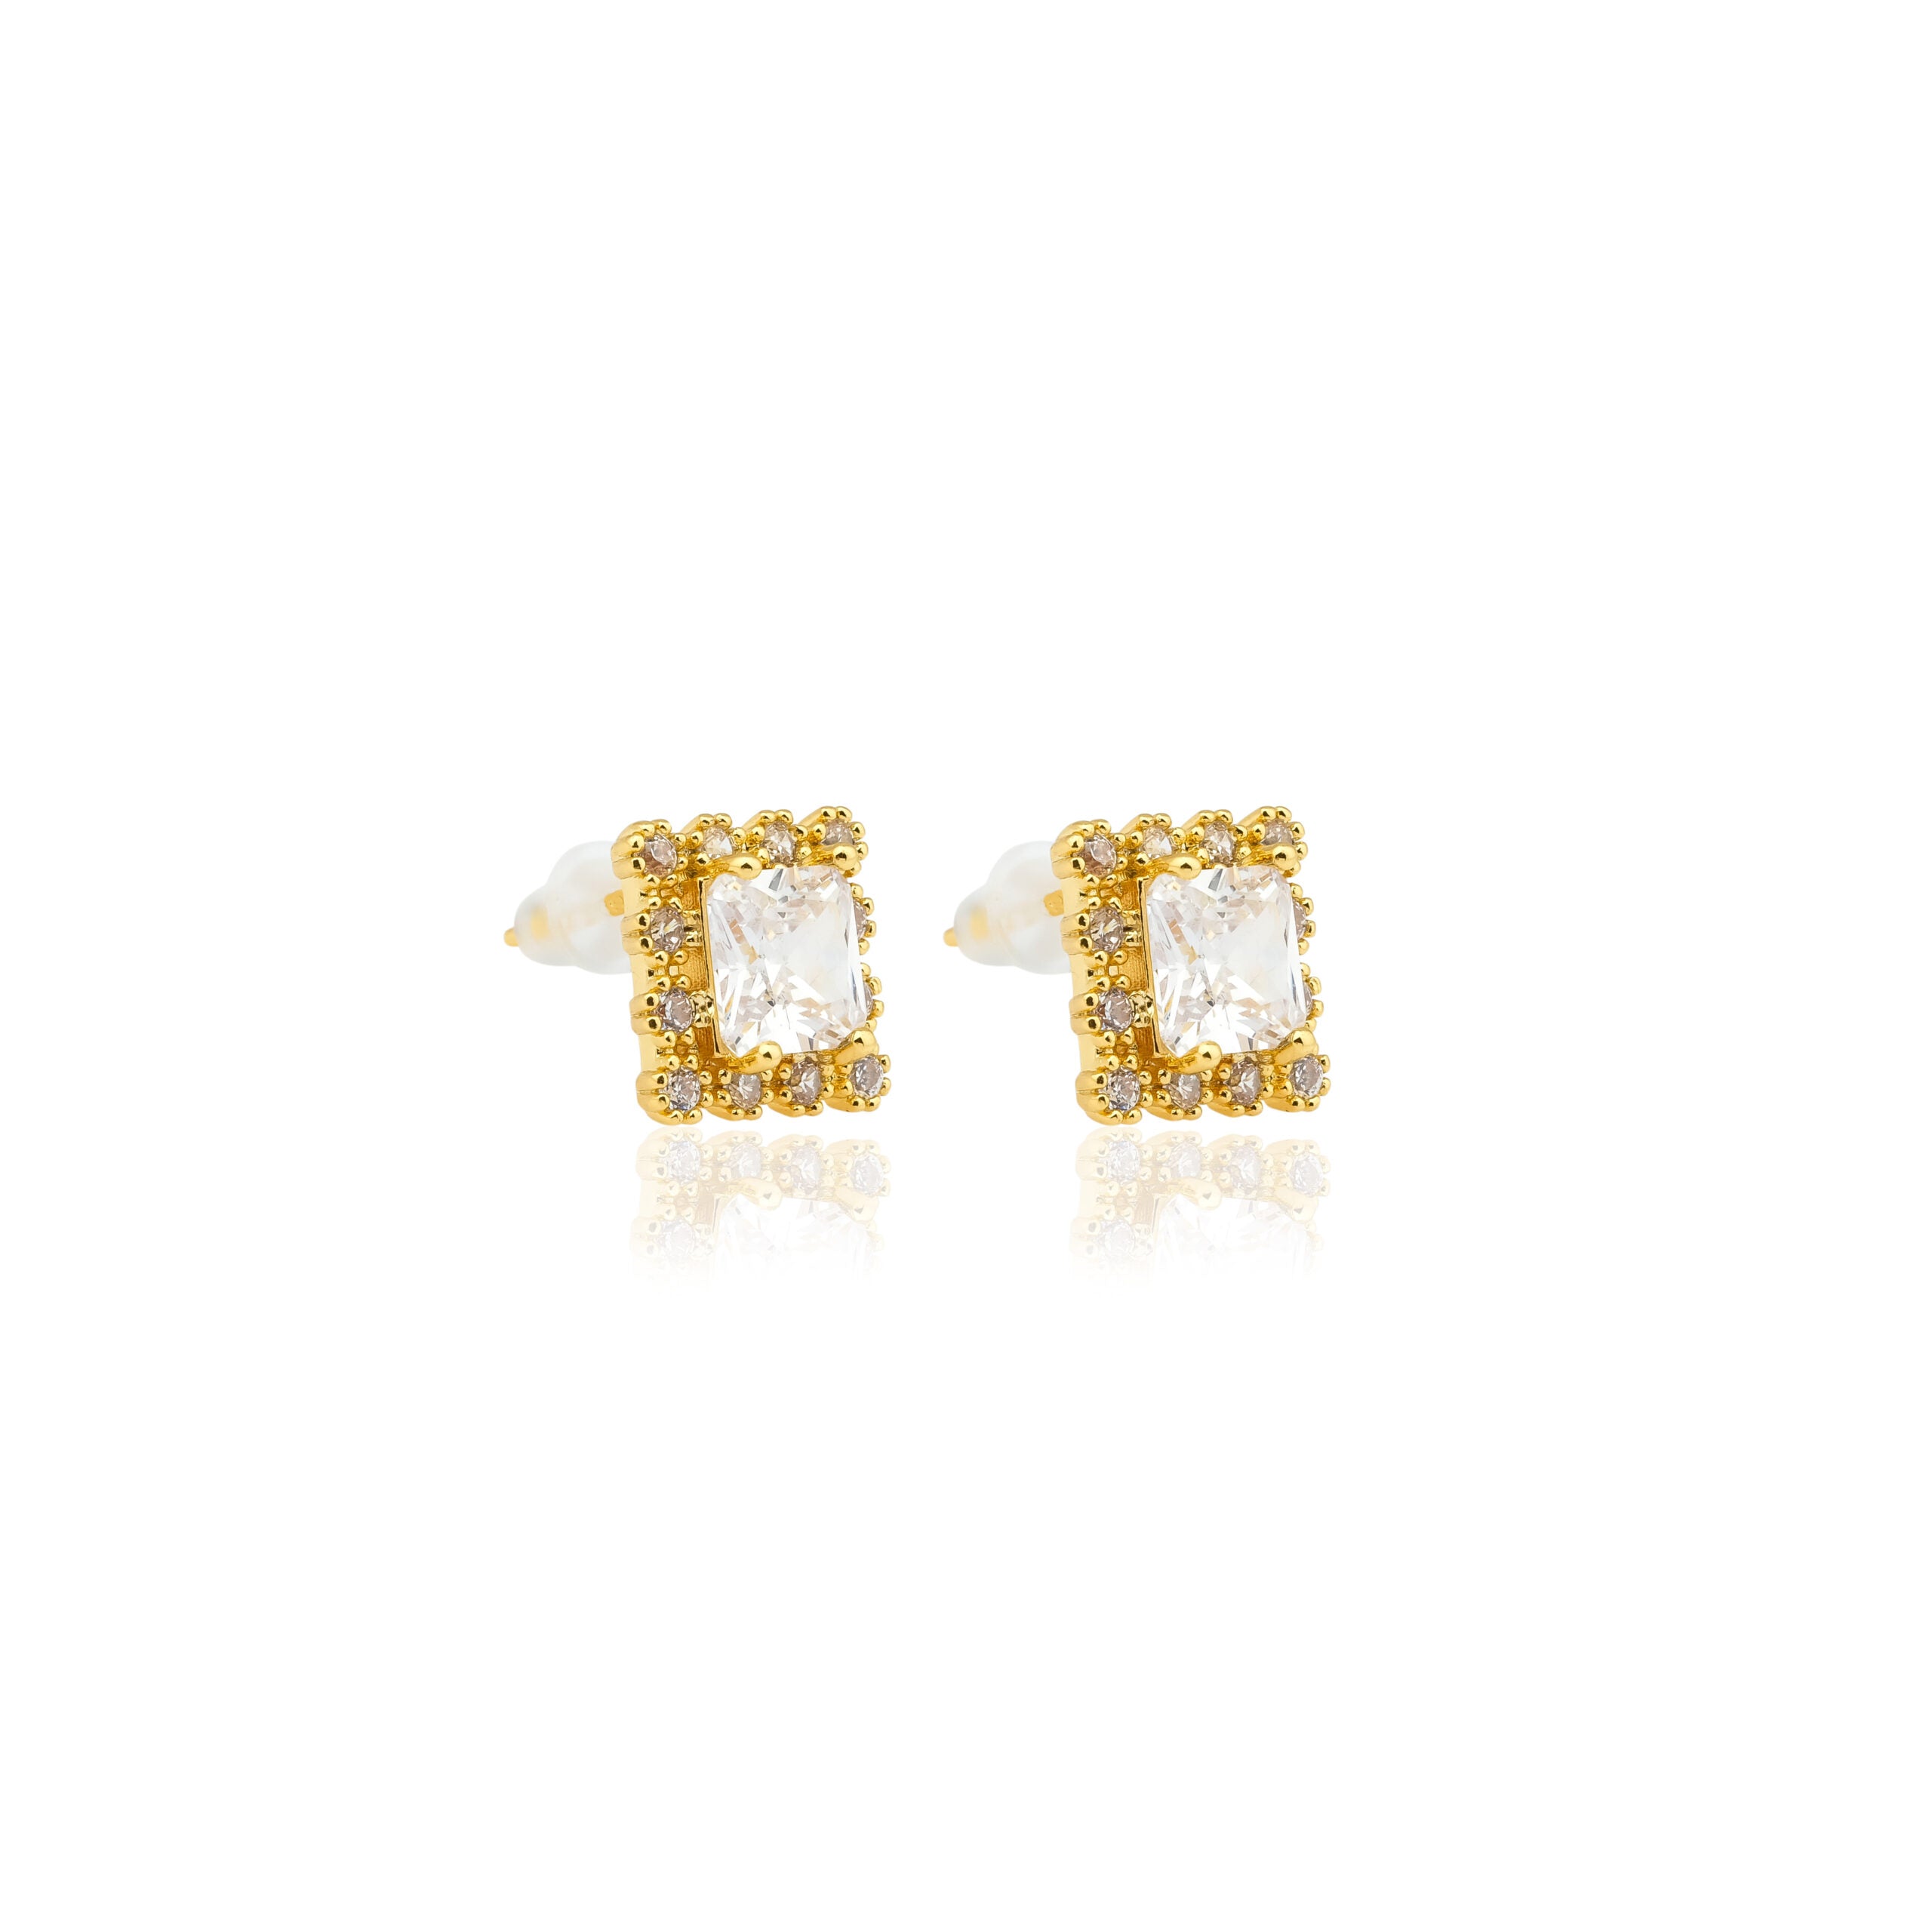 Golden Crystal stud earrings 